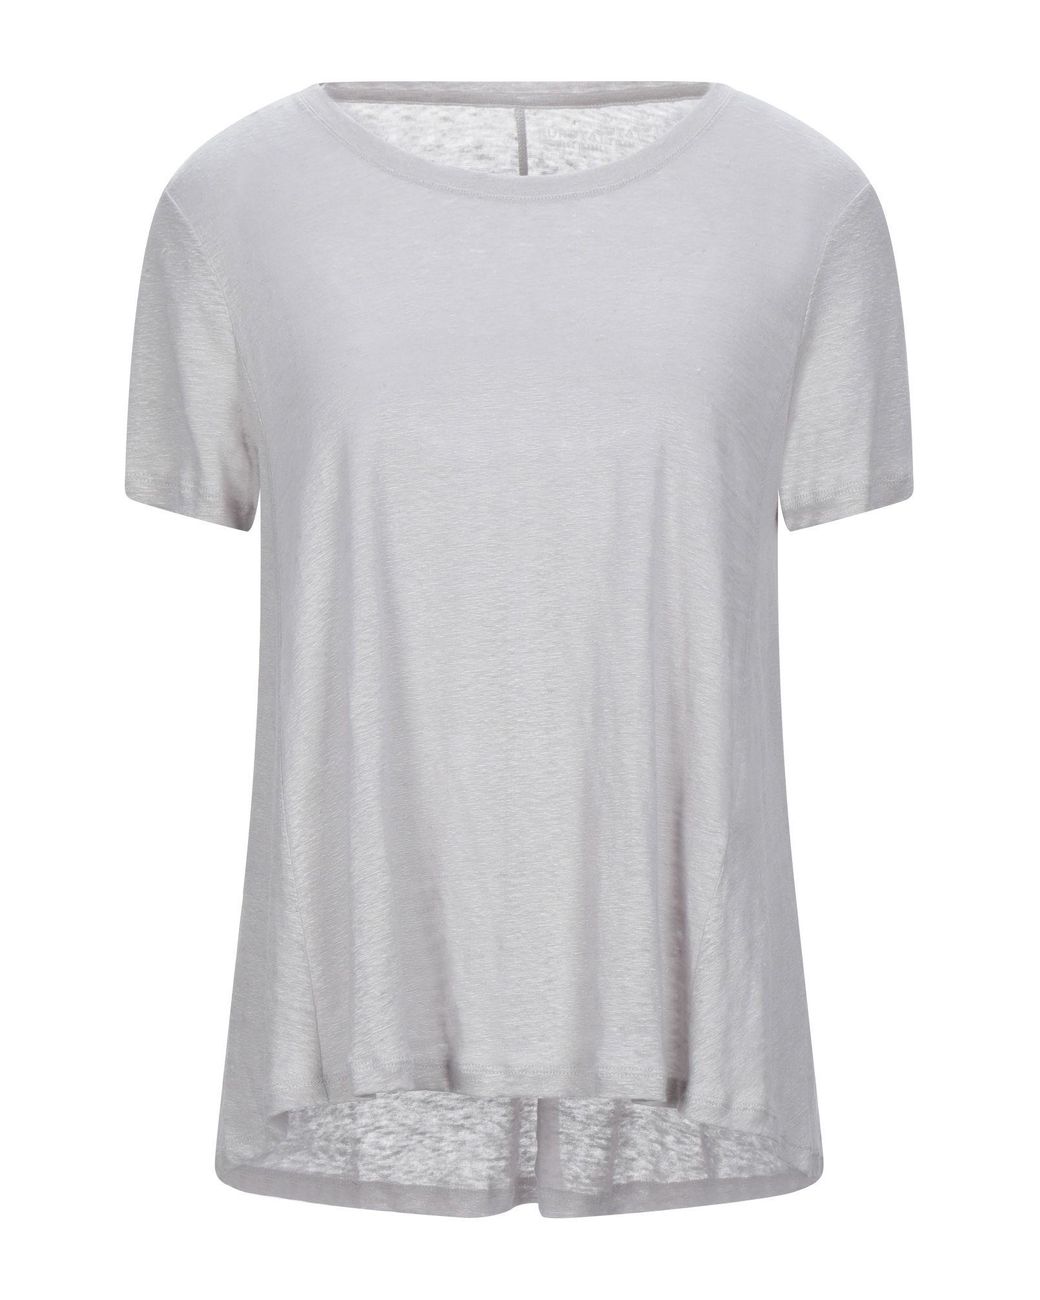 Purotatto Linen T-shirt in Light Grey (Gray) - Lyst